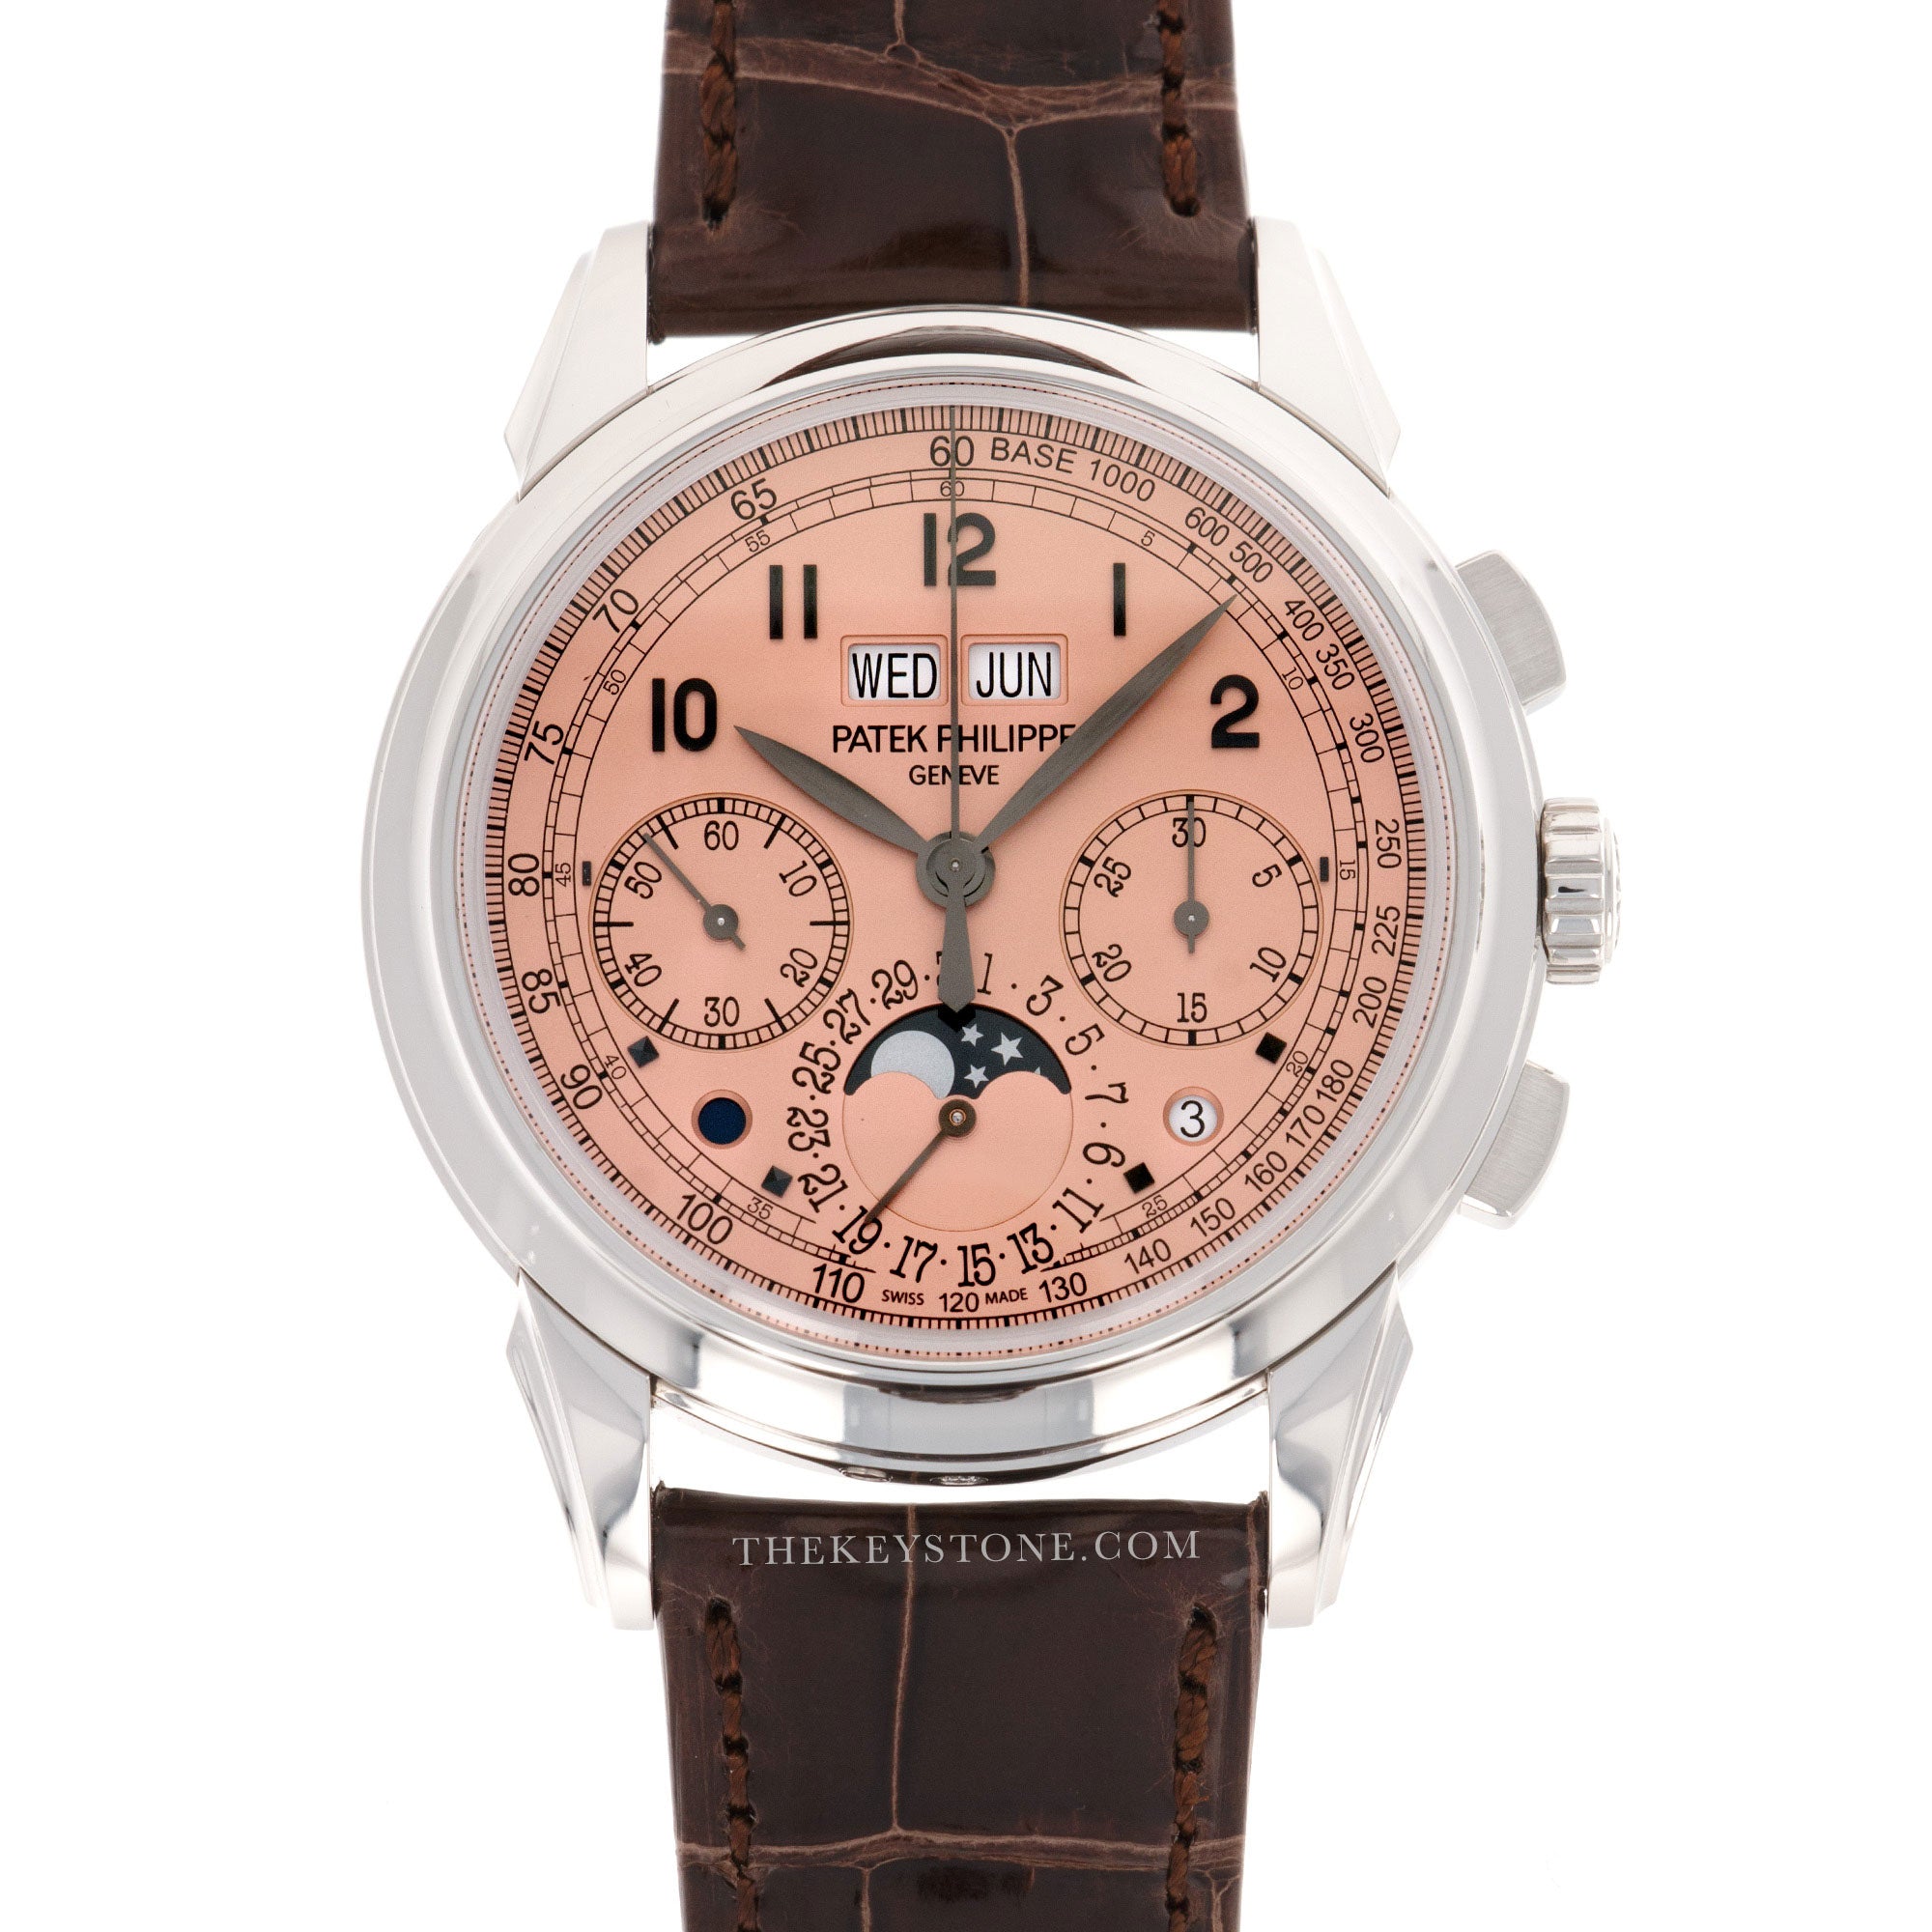 Patek Philippe - Patek Philippe Platinum Perpetual Calendar Chronograph Watch Ref. 5270 - The Keystone Watches